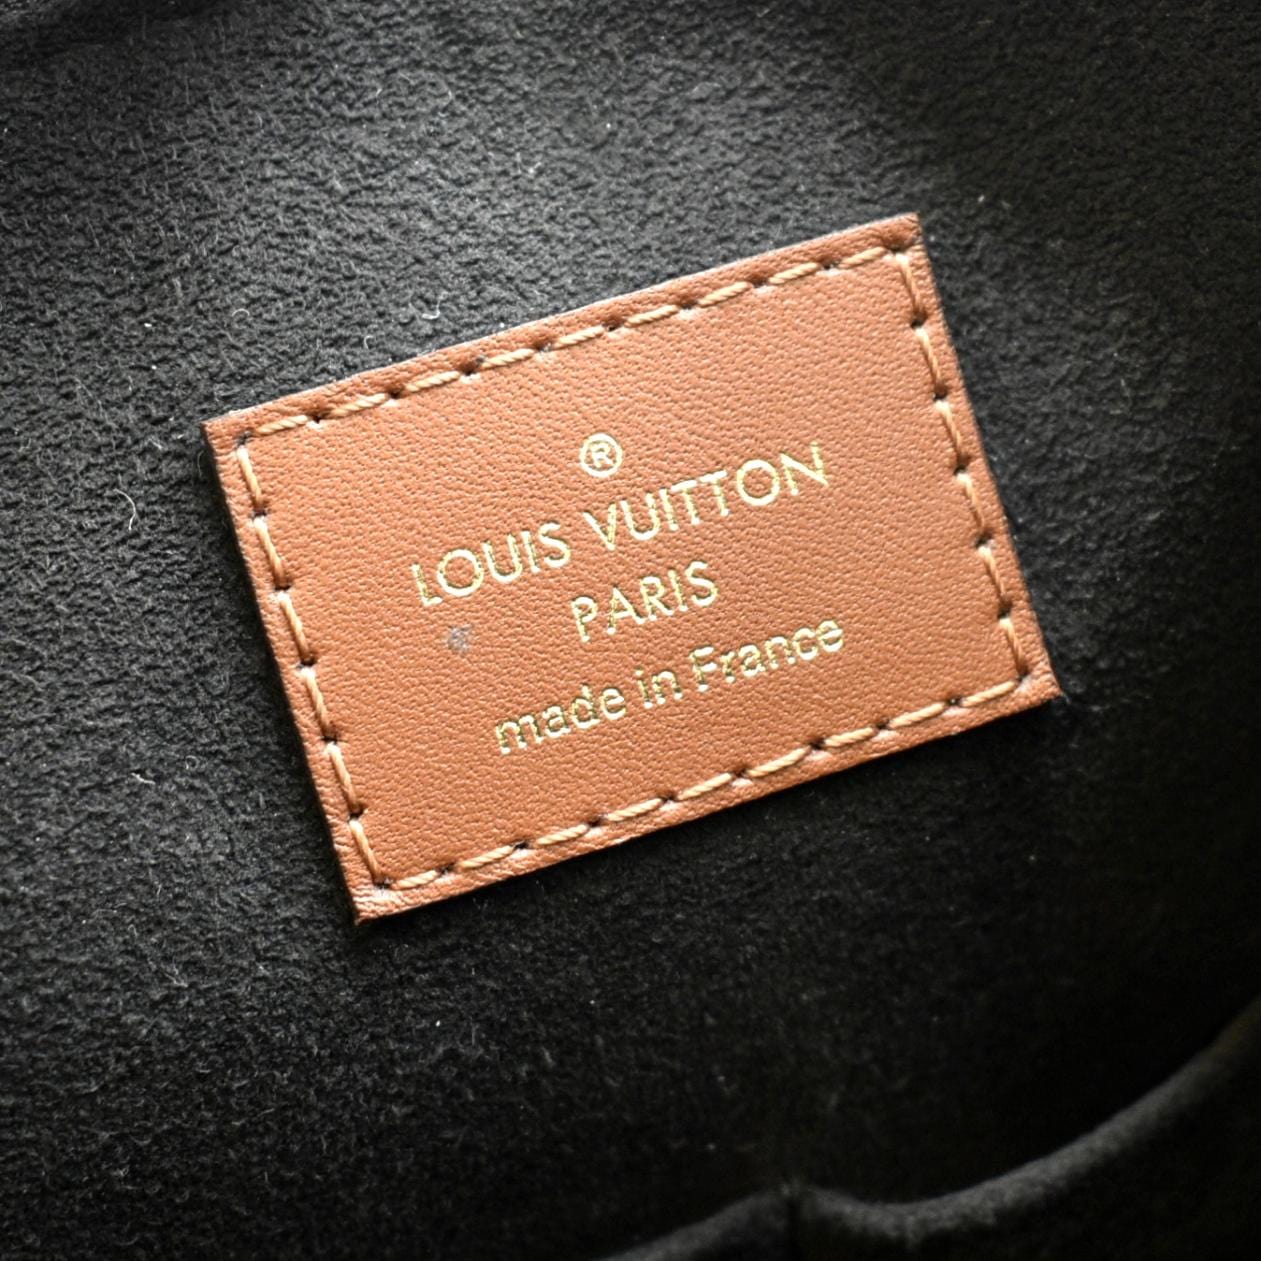 Louis Vuitton V mm Monogram Leather Hobo Bag